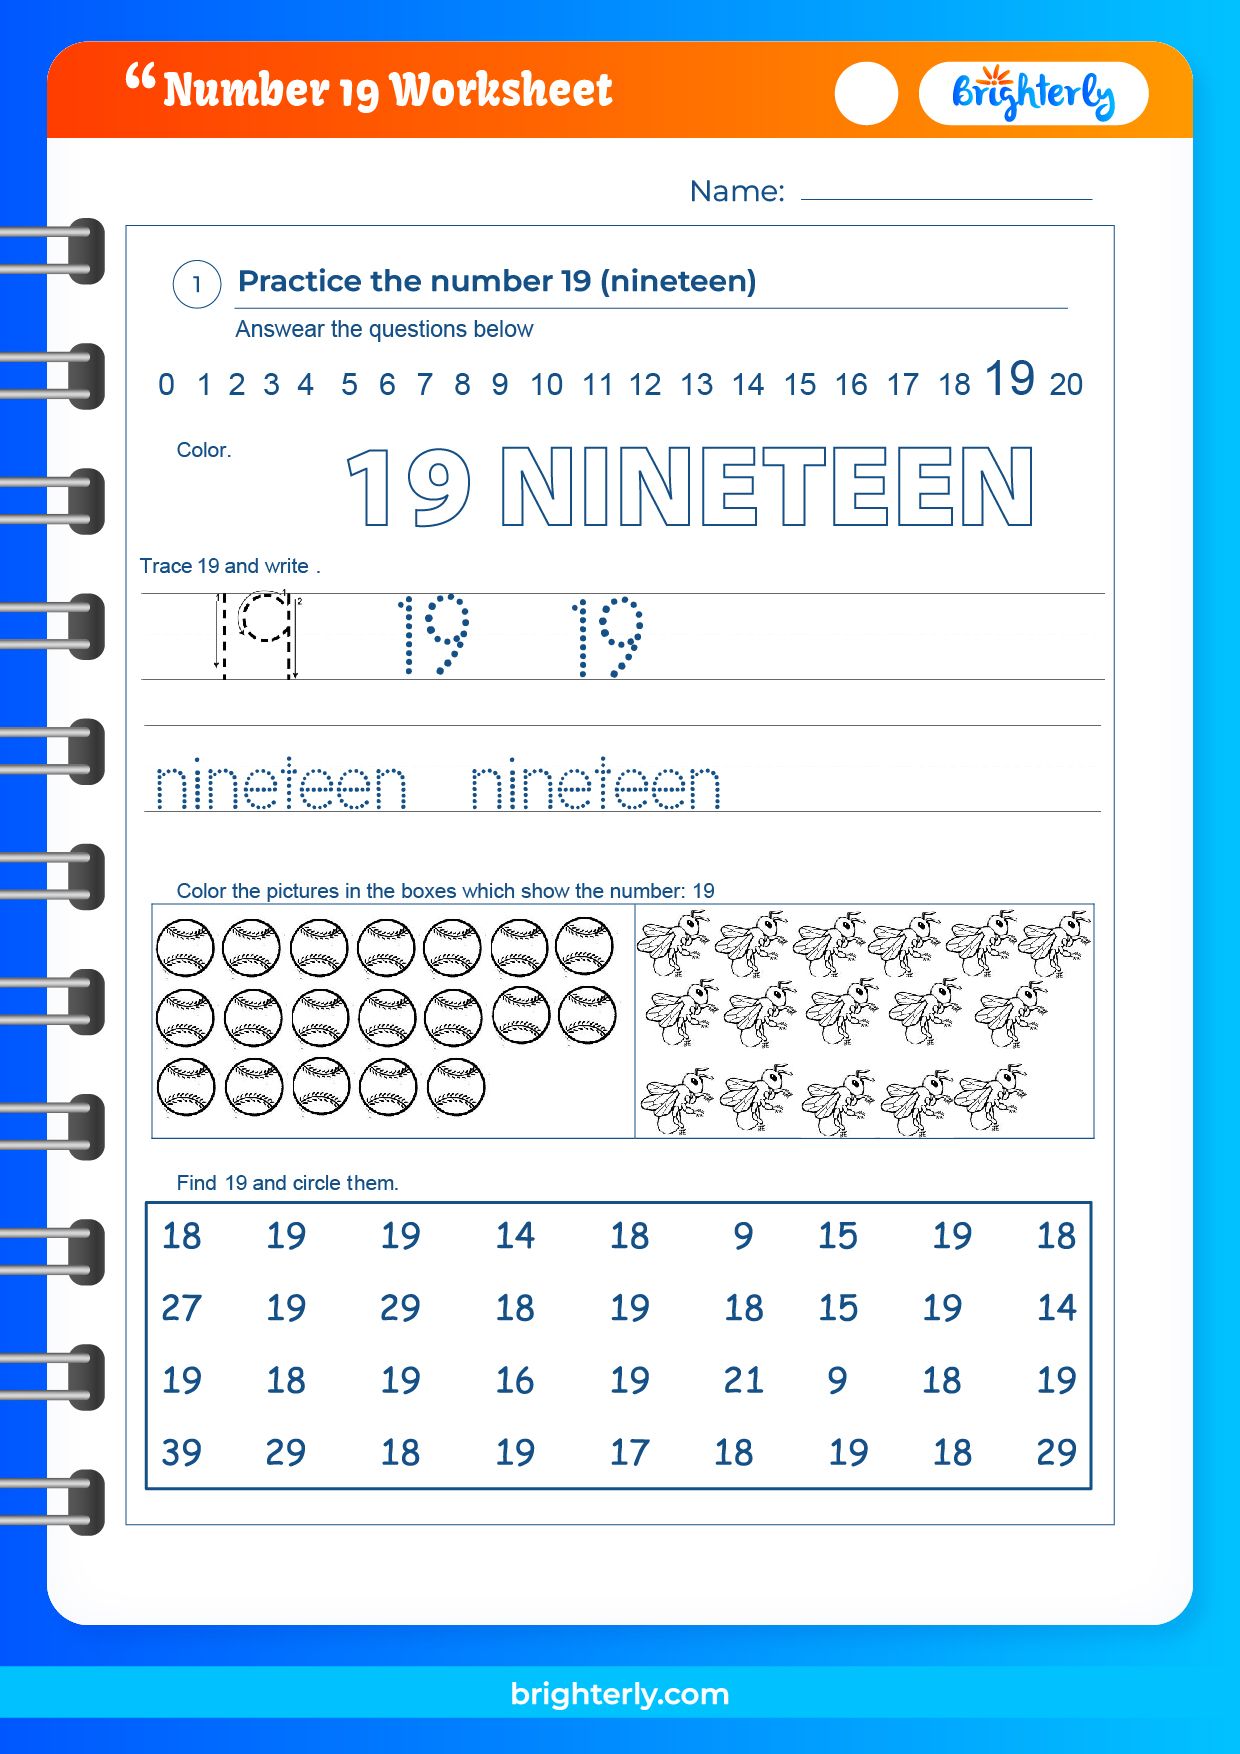 free-printable-number-19-nineteen-worksheets-for-kids-pdfs